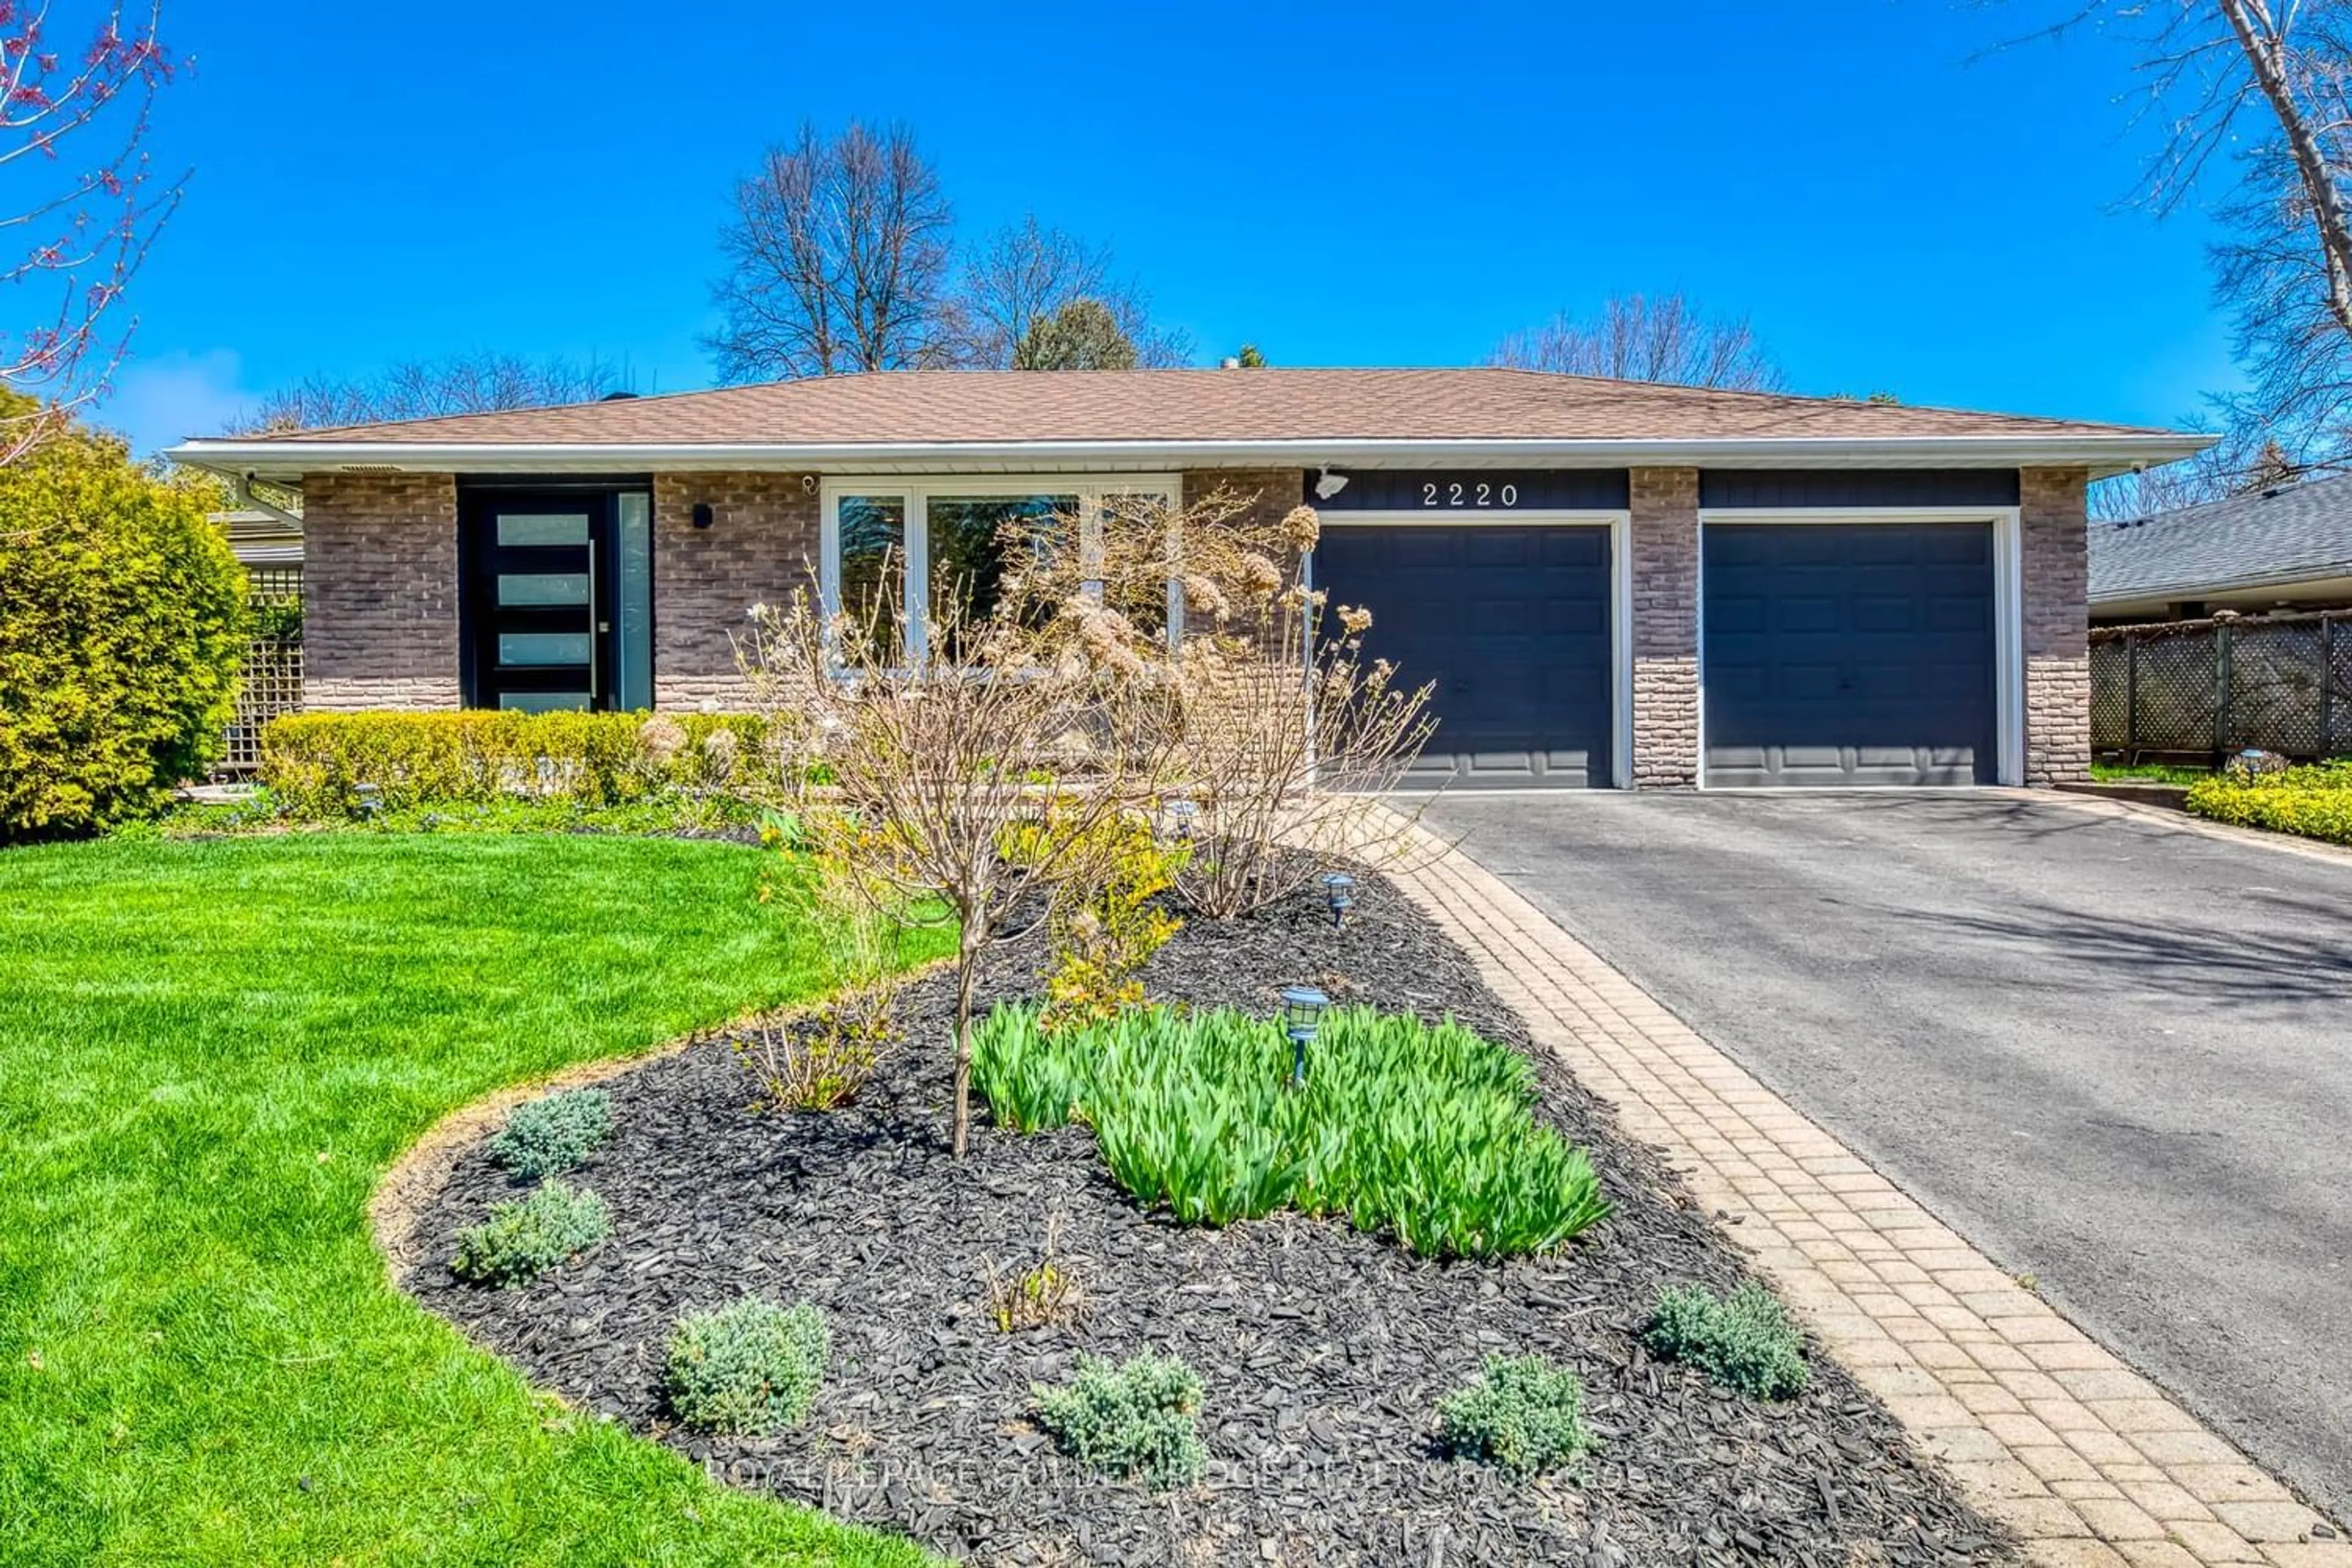 Home with brick exterior material for 2220 Elmhurst Ave, Oakville Ontario L6J 5G7